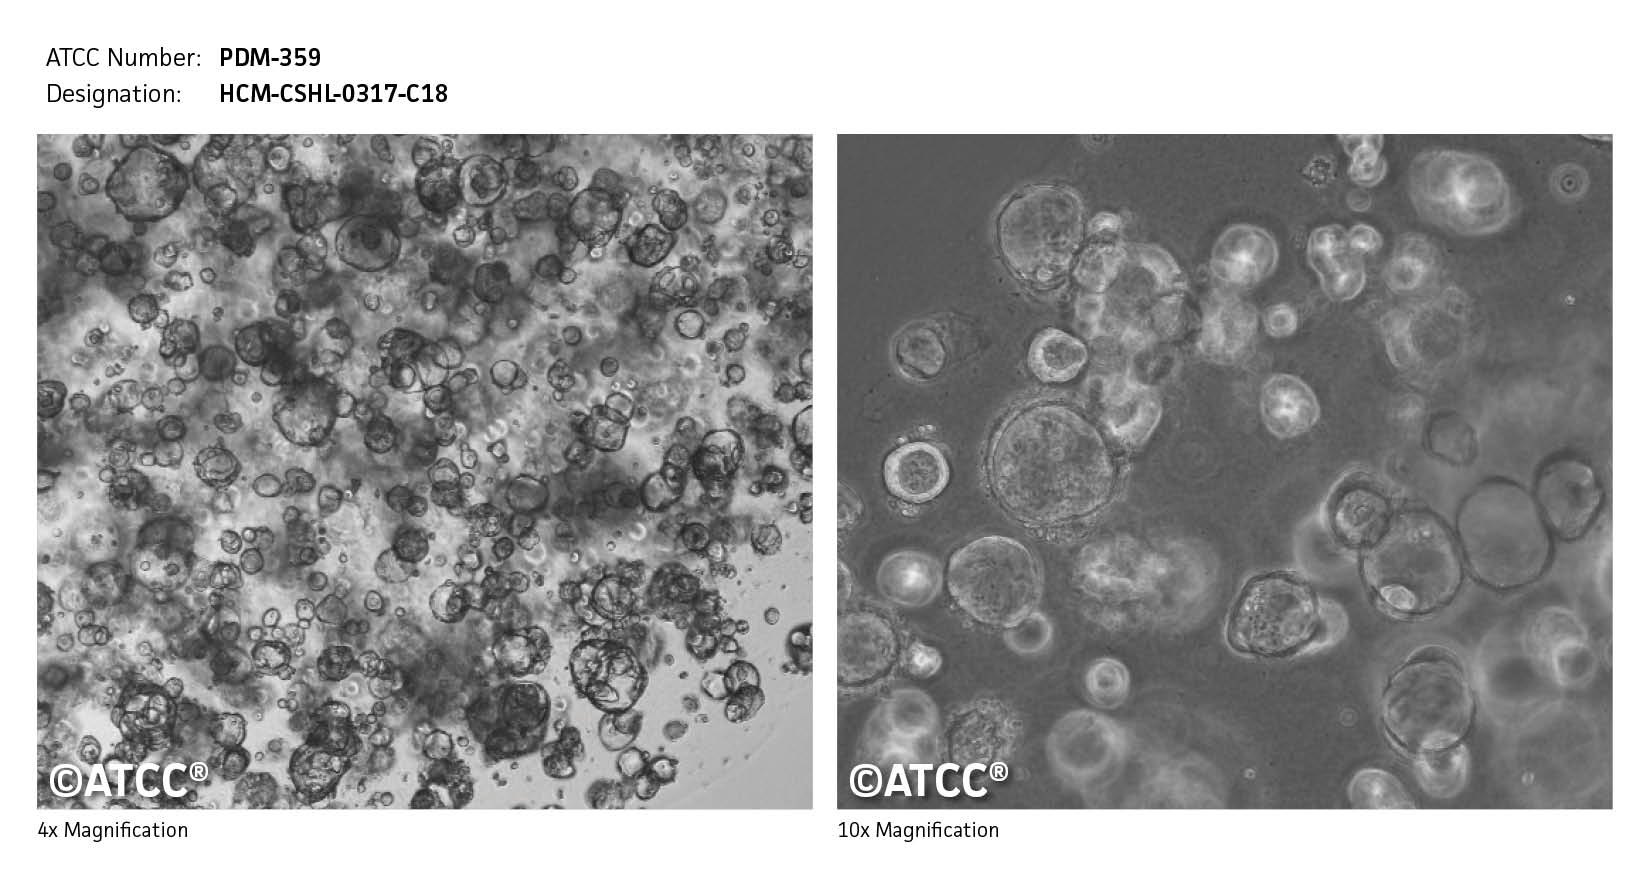 ATCC PDM-359 Cell Micrograph